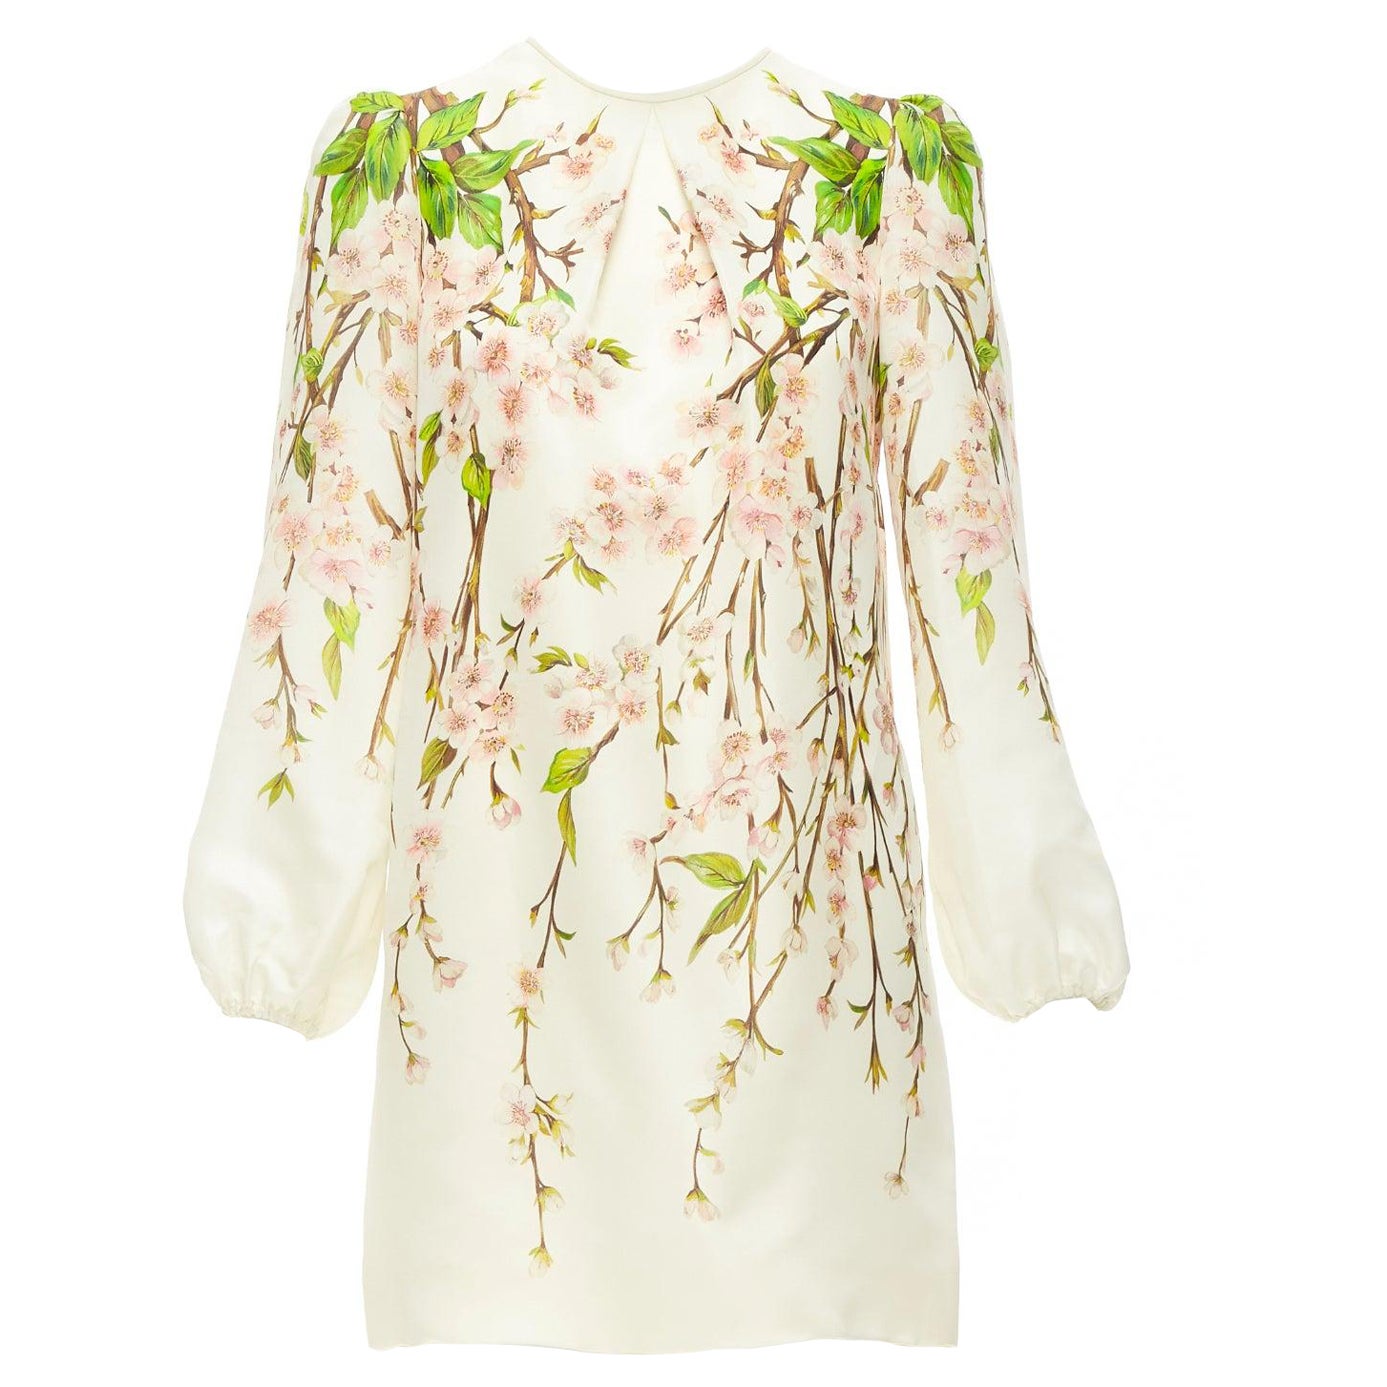 DOLCE GABBANA 100% silk cream cherry blossom print puff white dress IT40 S For Sale